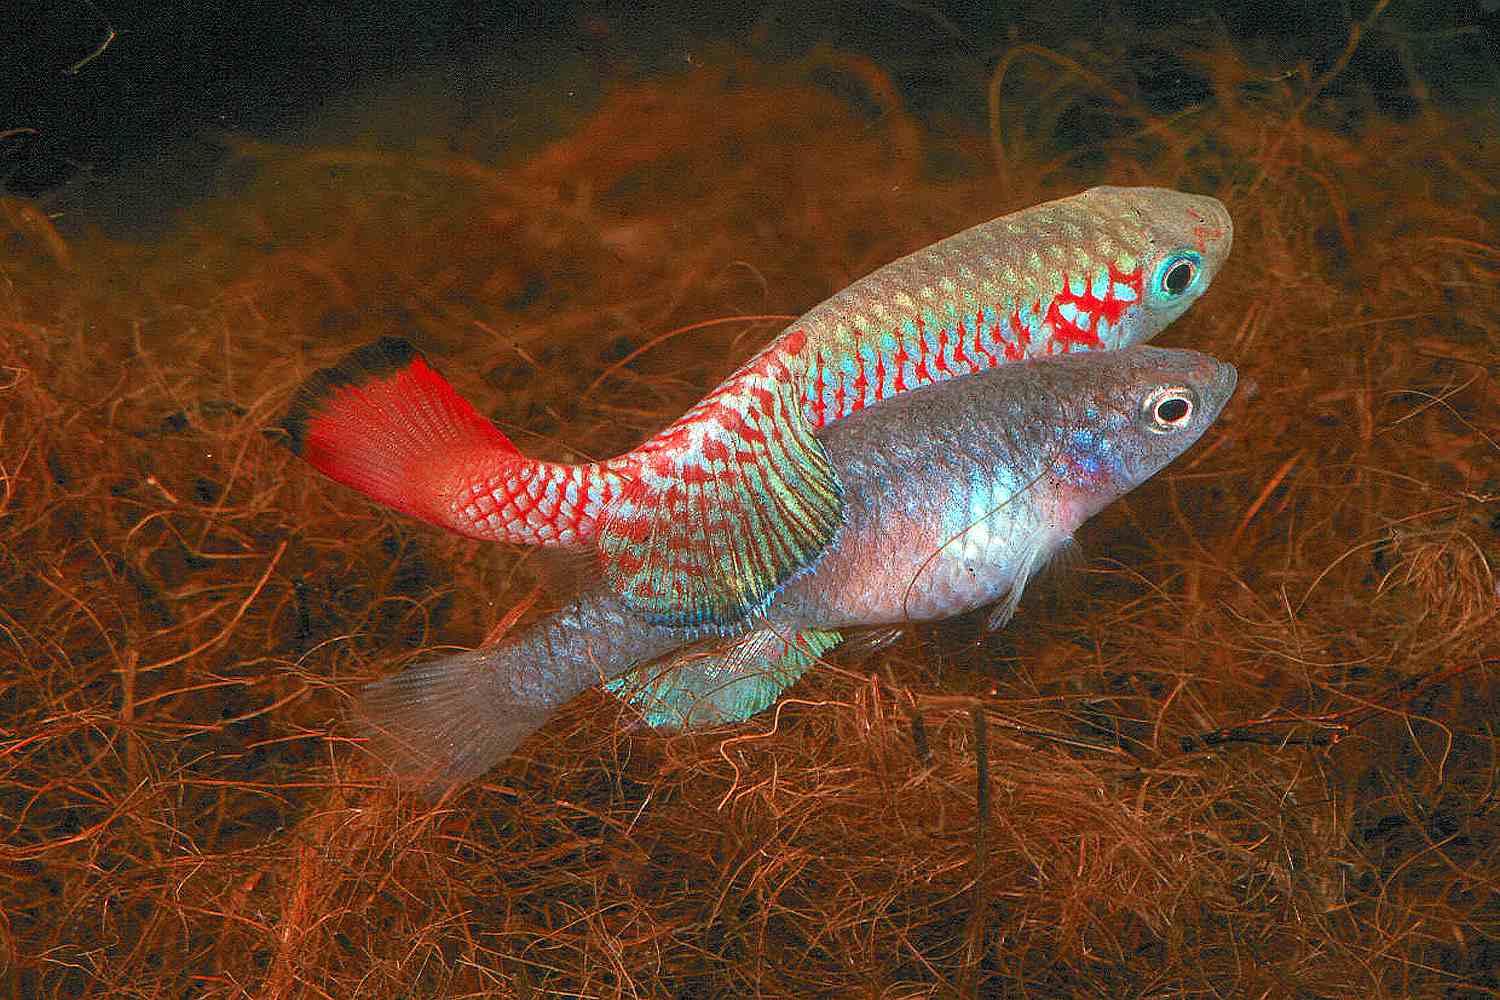 Male and female killifish swimming in an aquarium